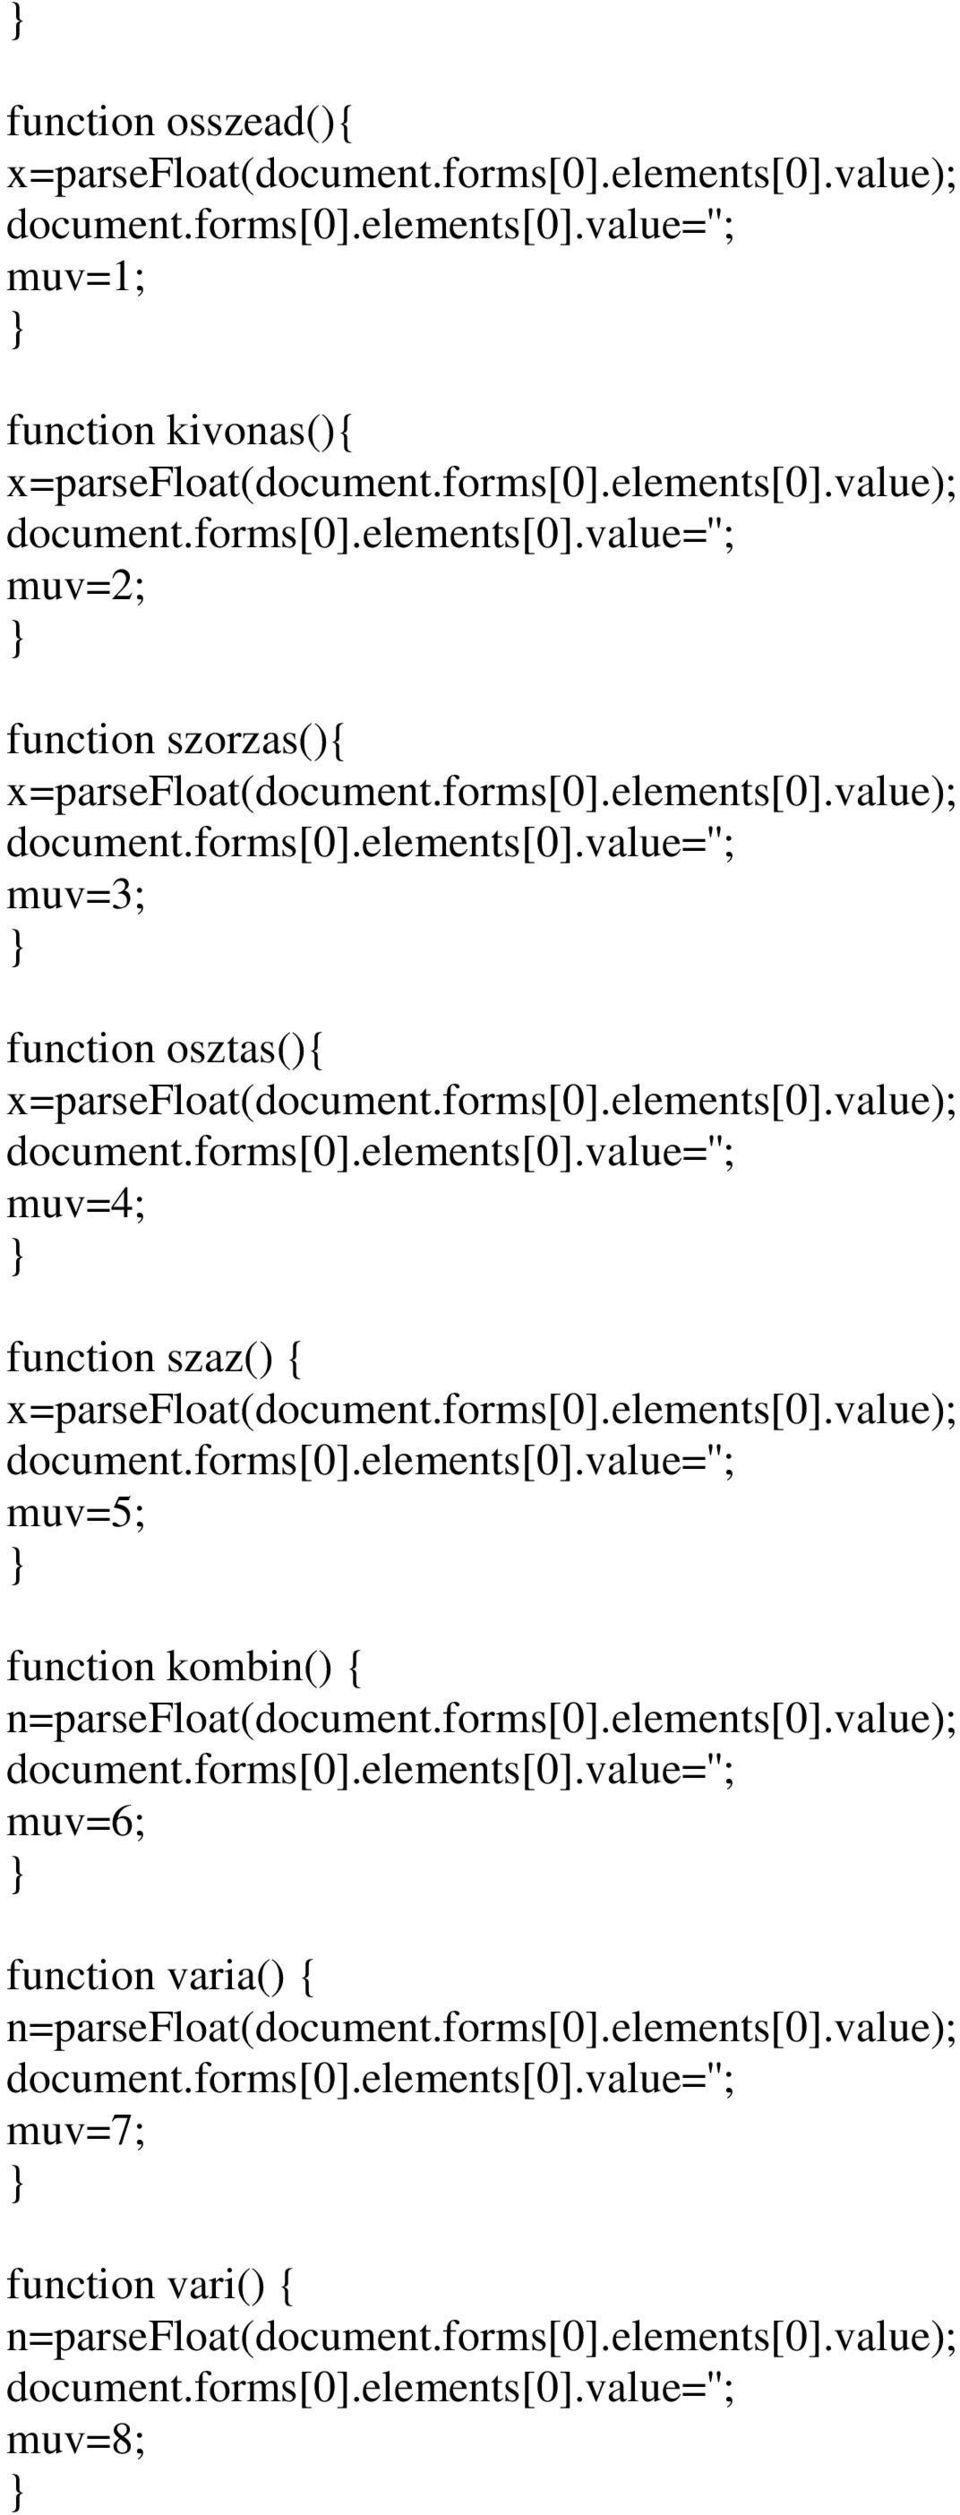 elements[0].value); muv=6; function varia() n=parsefloat(document.forms[0].elements[0].value); muv=7; function vari() n=parsefloat(document.